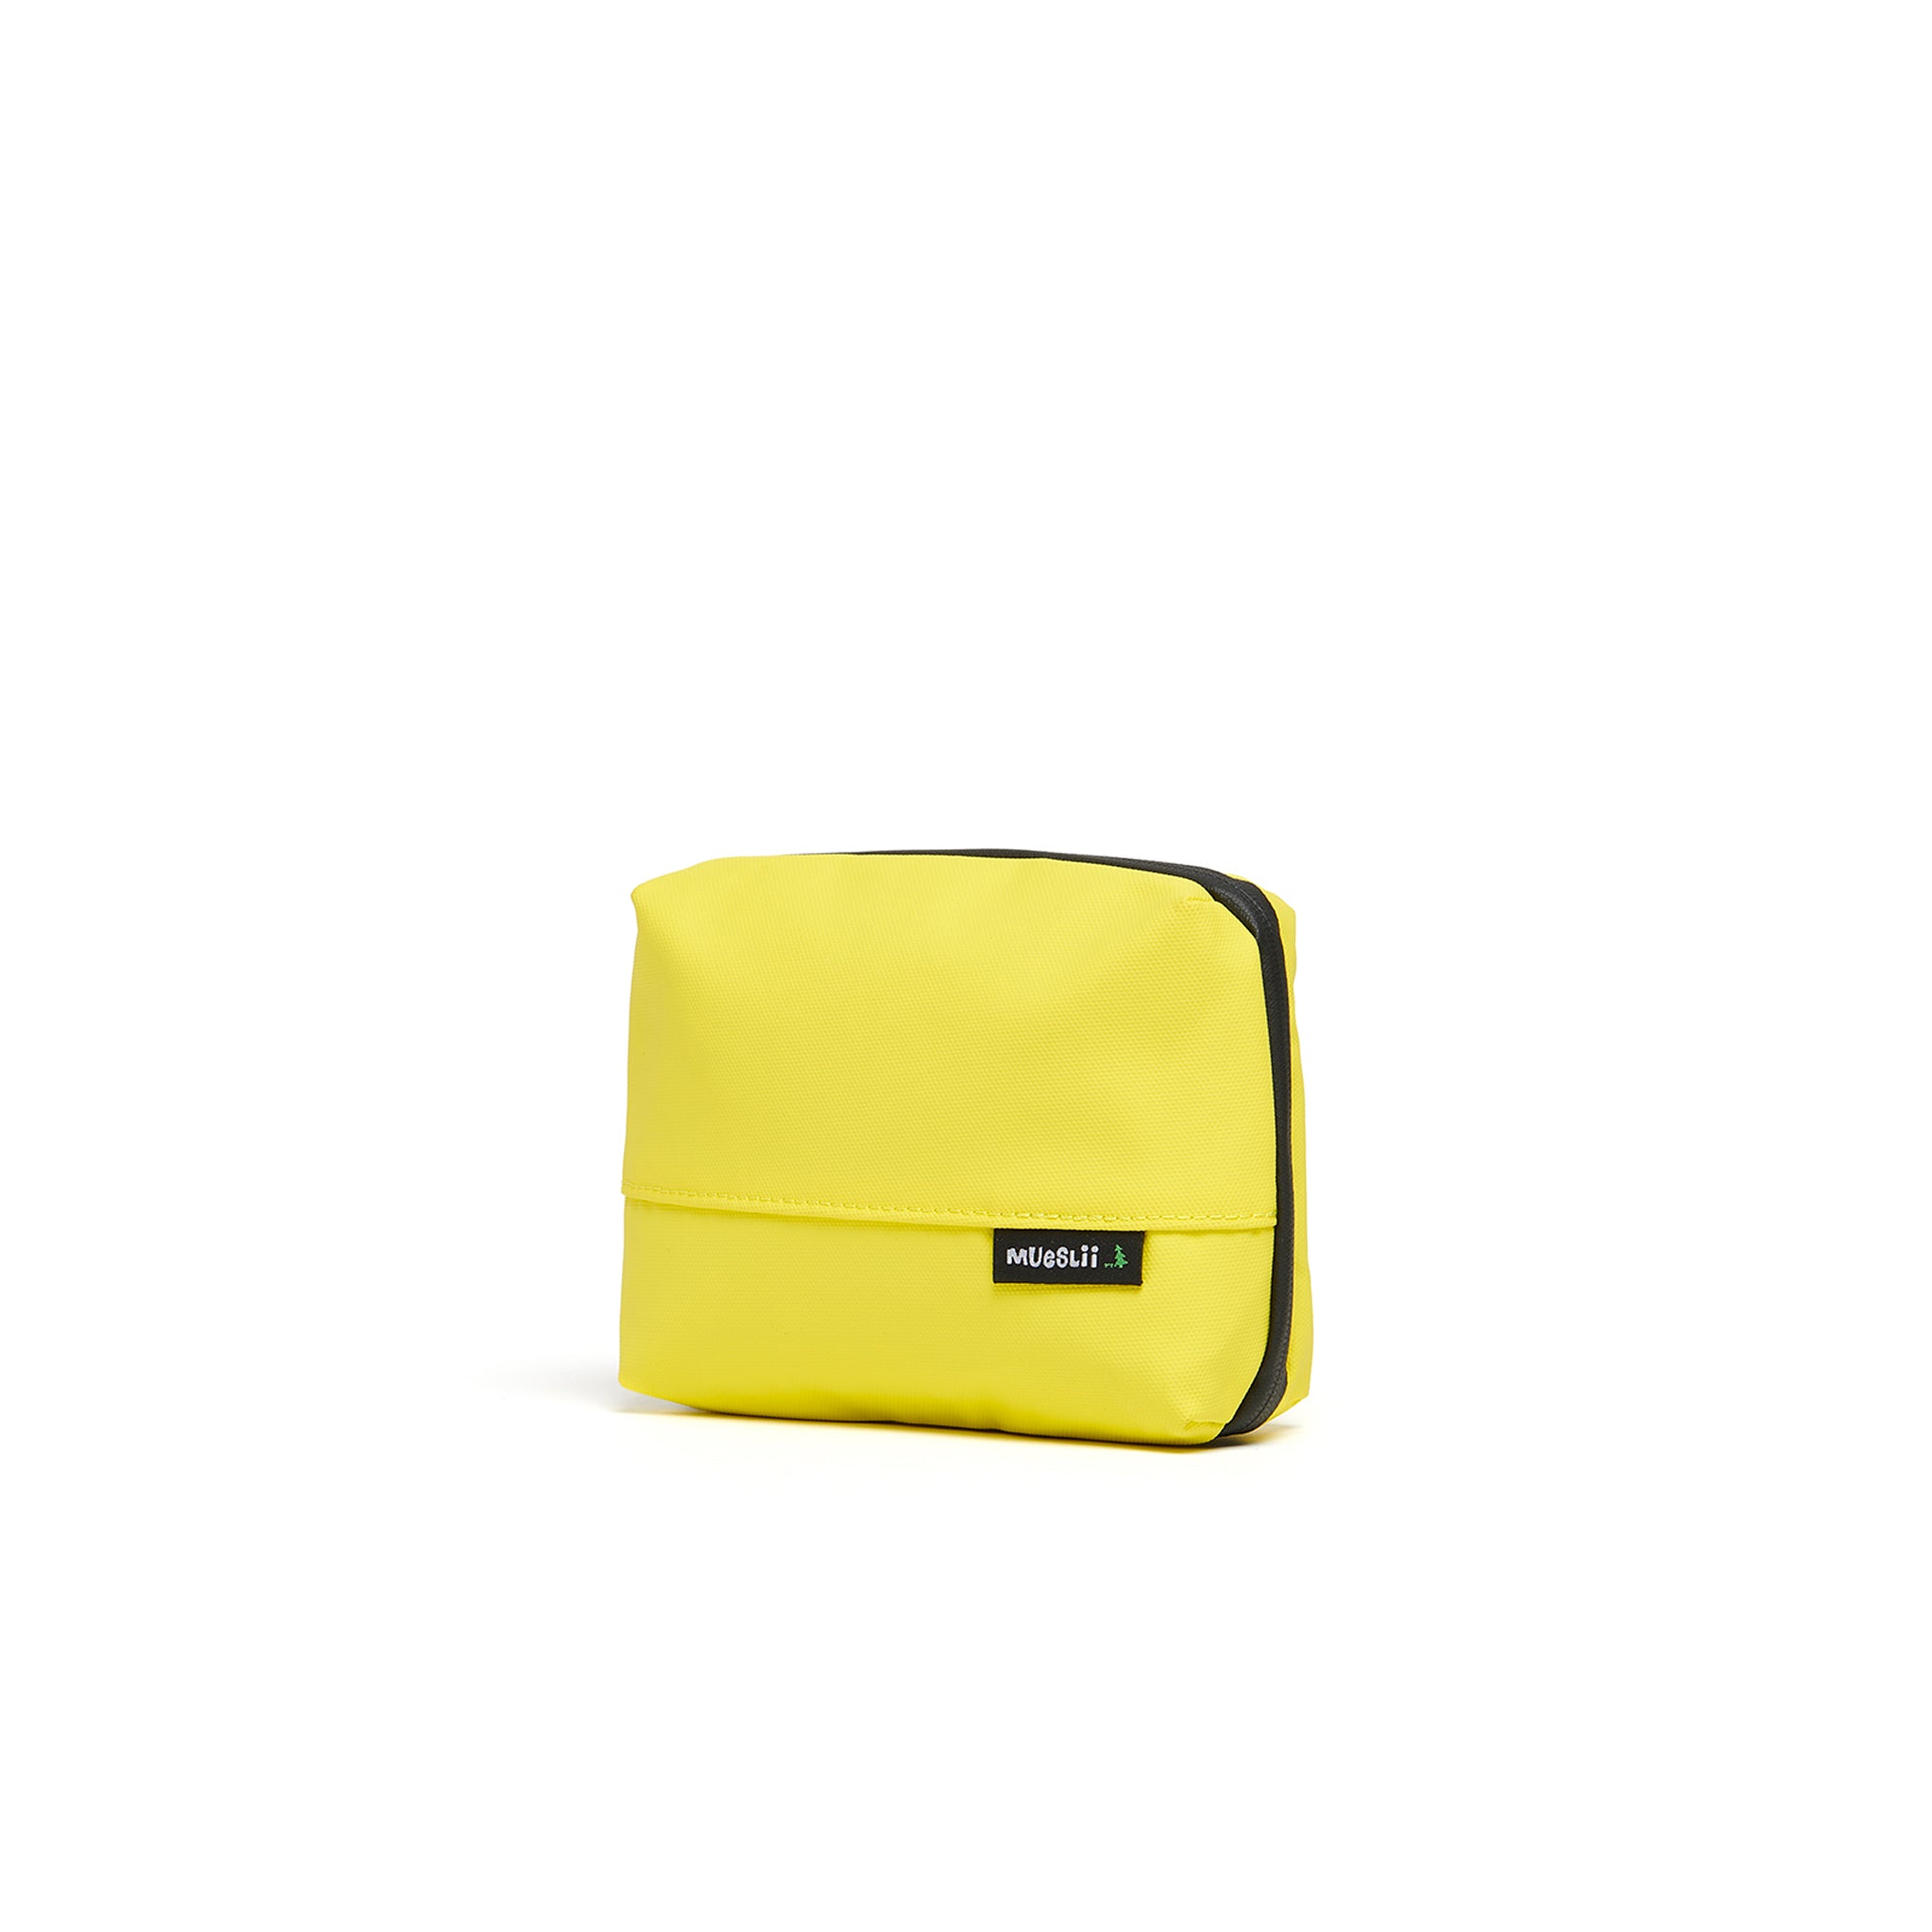 Mueslii tech case, made of PU coated waterproof nylon, color lemon yellow, side view.